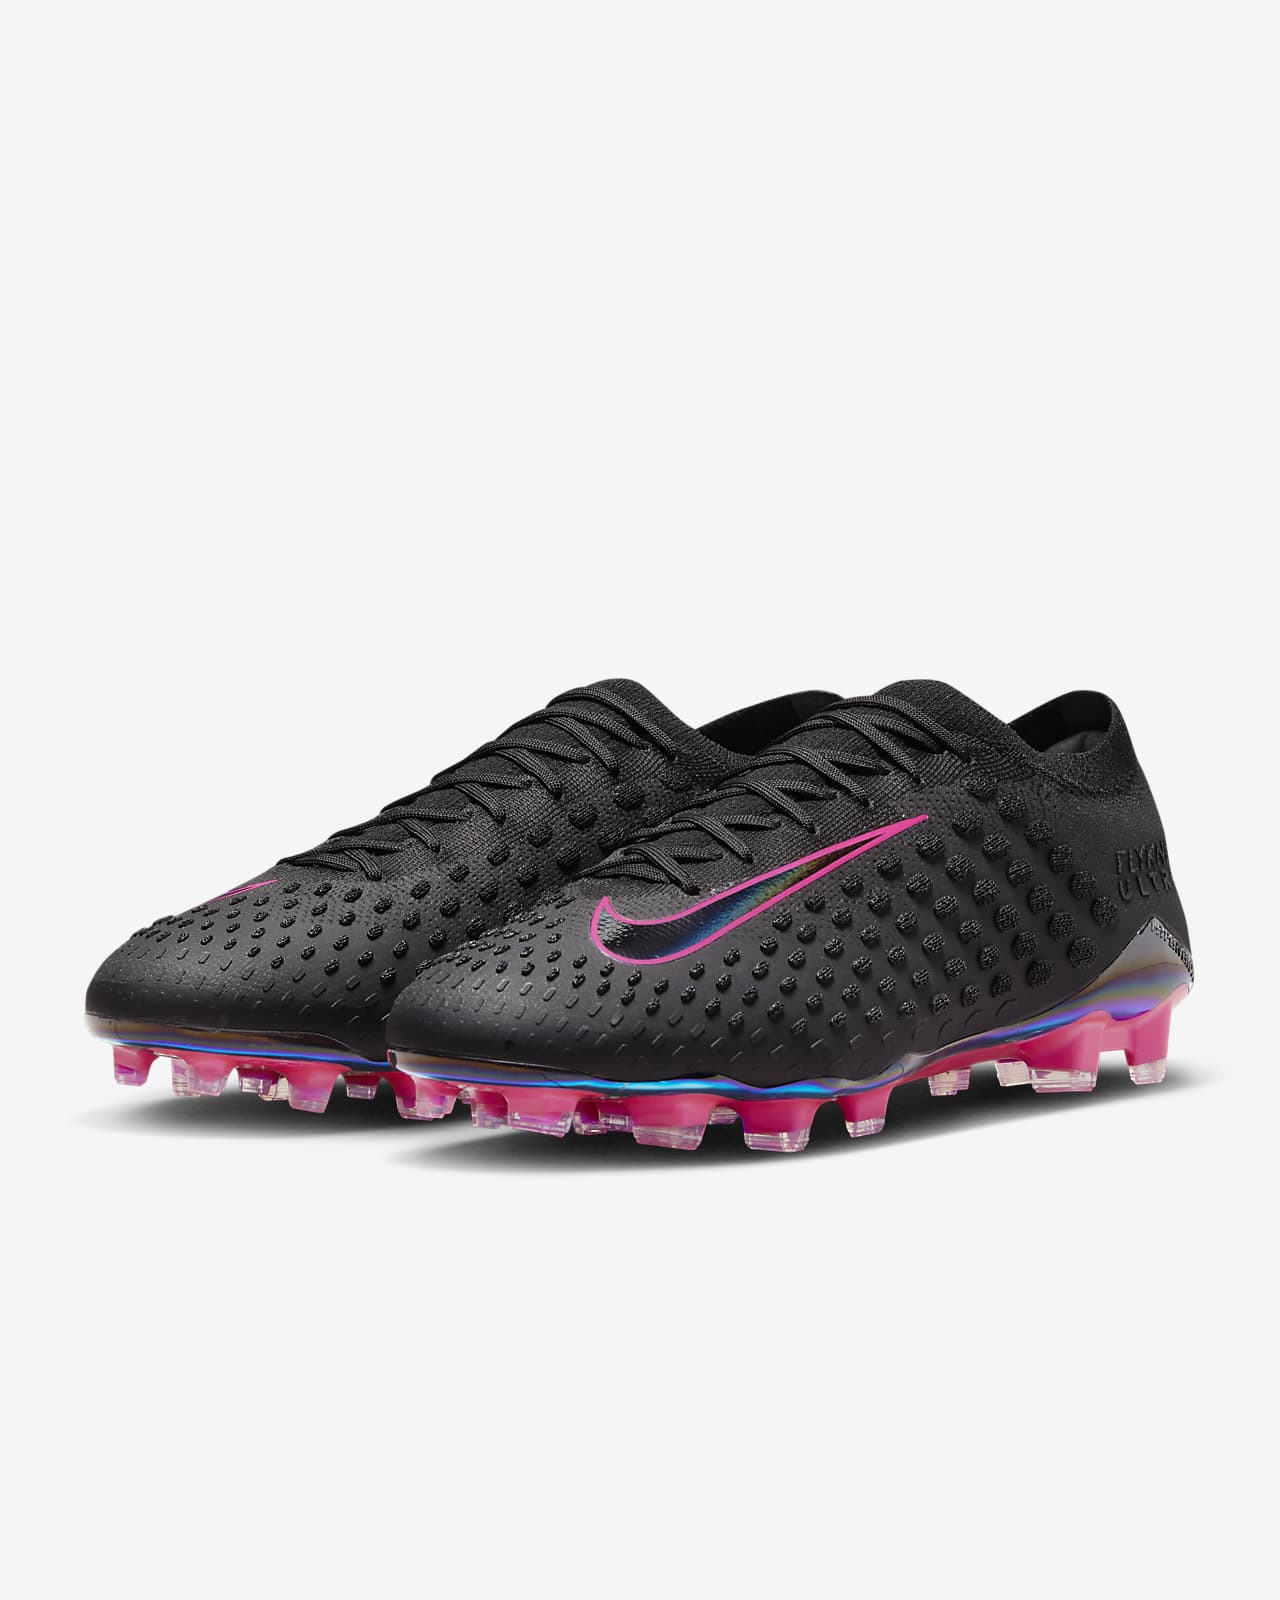 Nike Phantom Ultra Venom Firm-Ground Football Boots